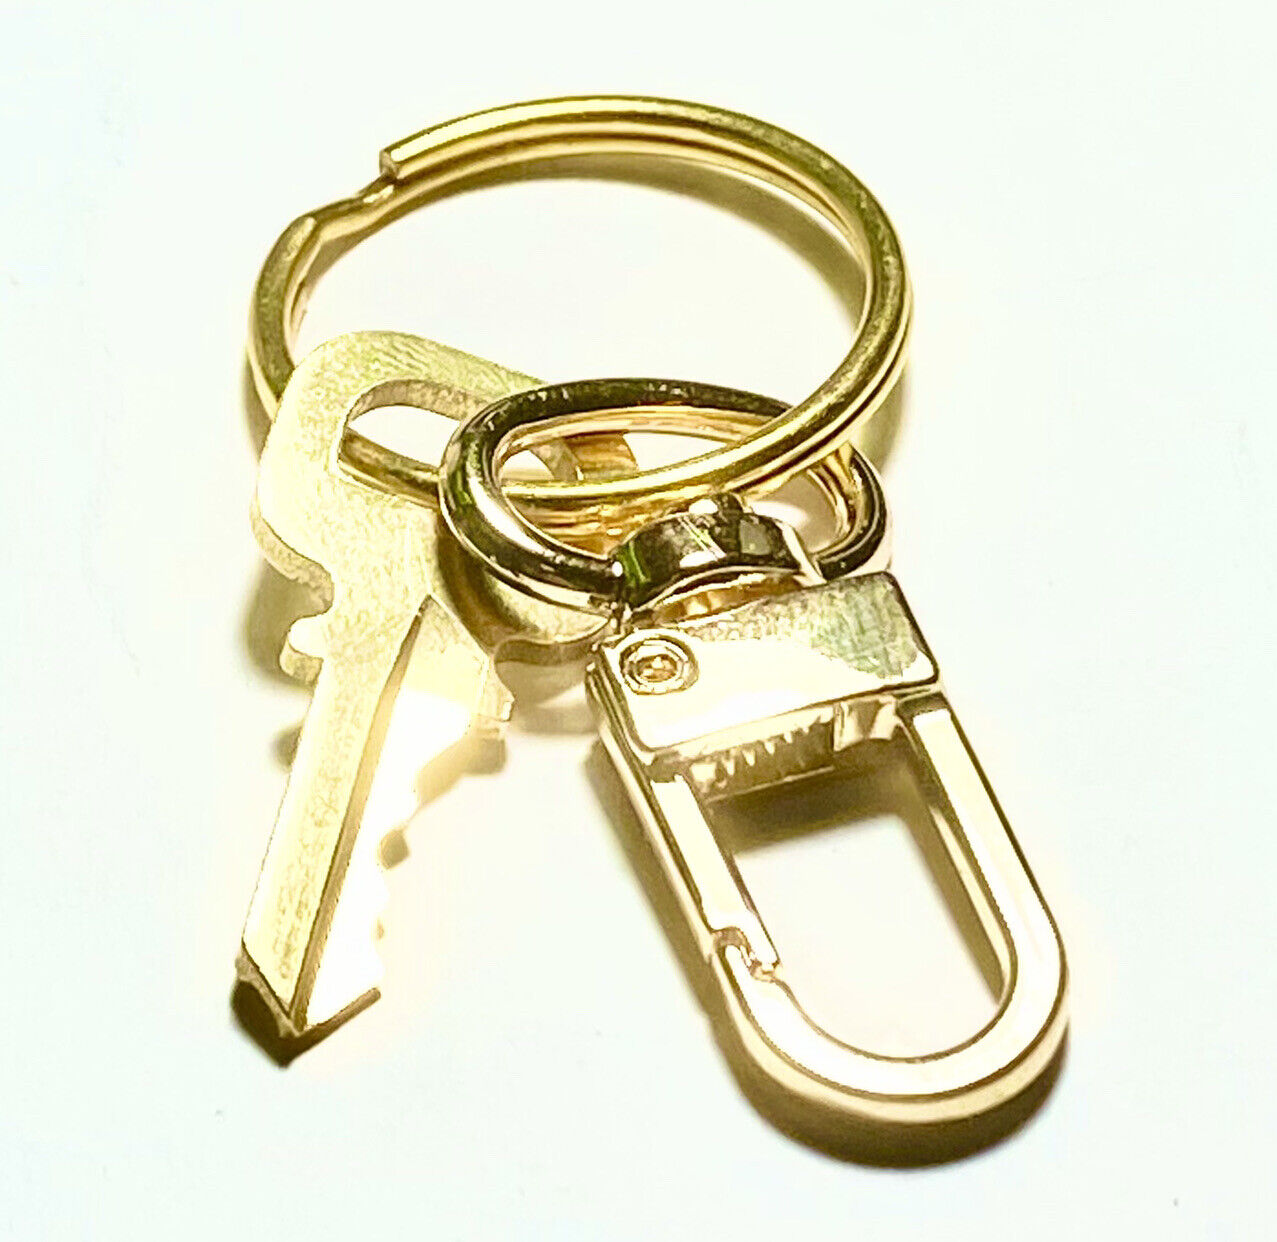 Louis Vuitton Key 328 Brass Goldtone Polished 1 Key